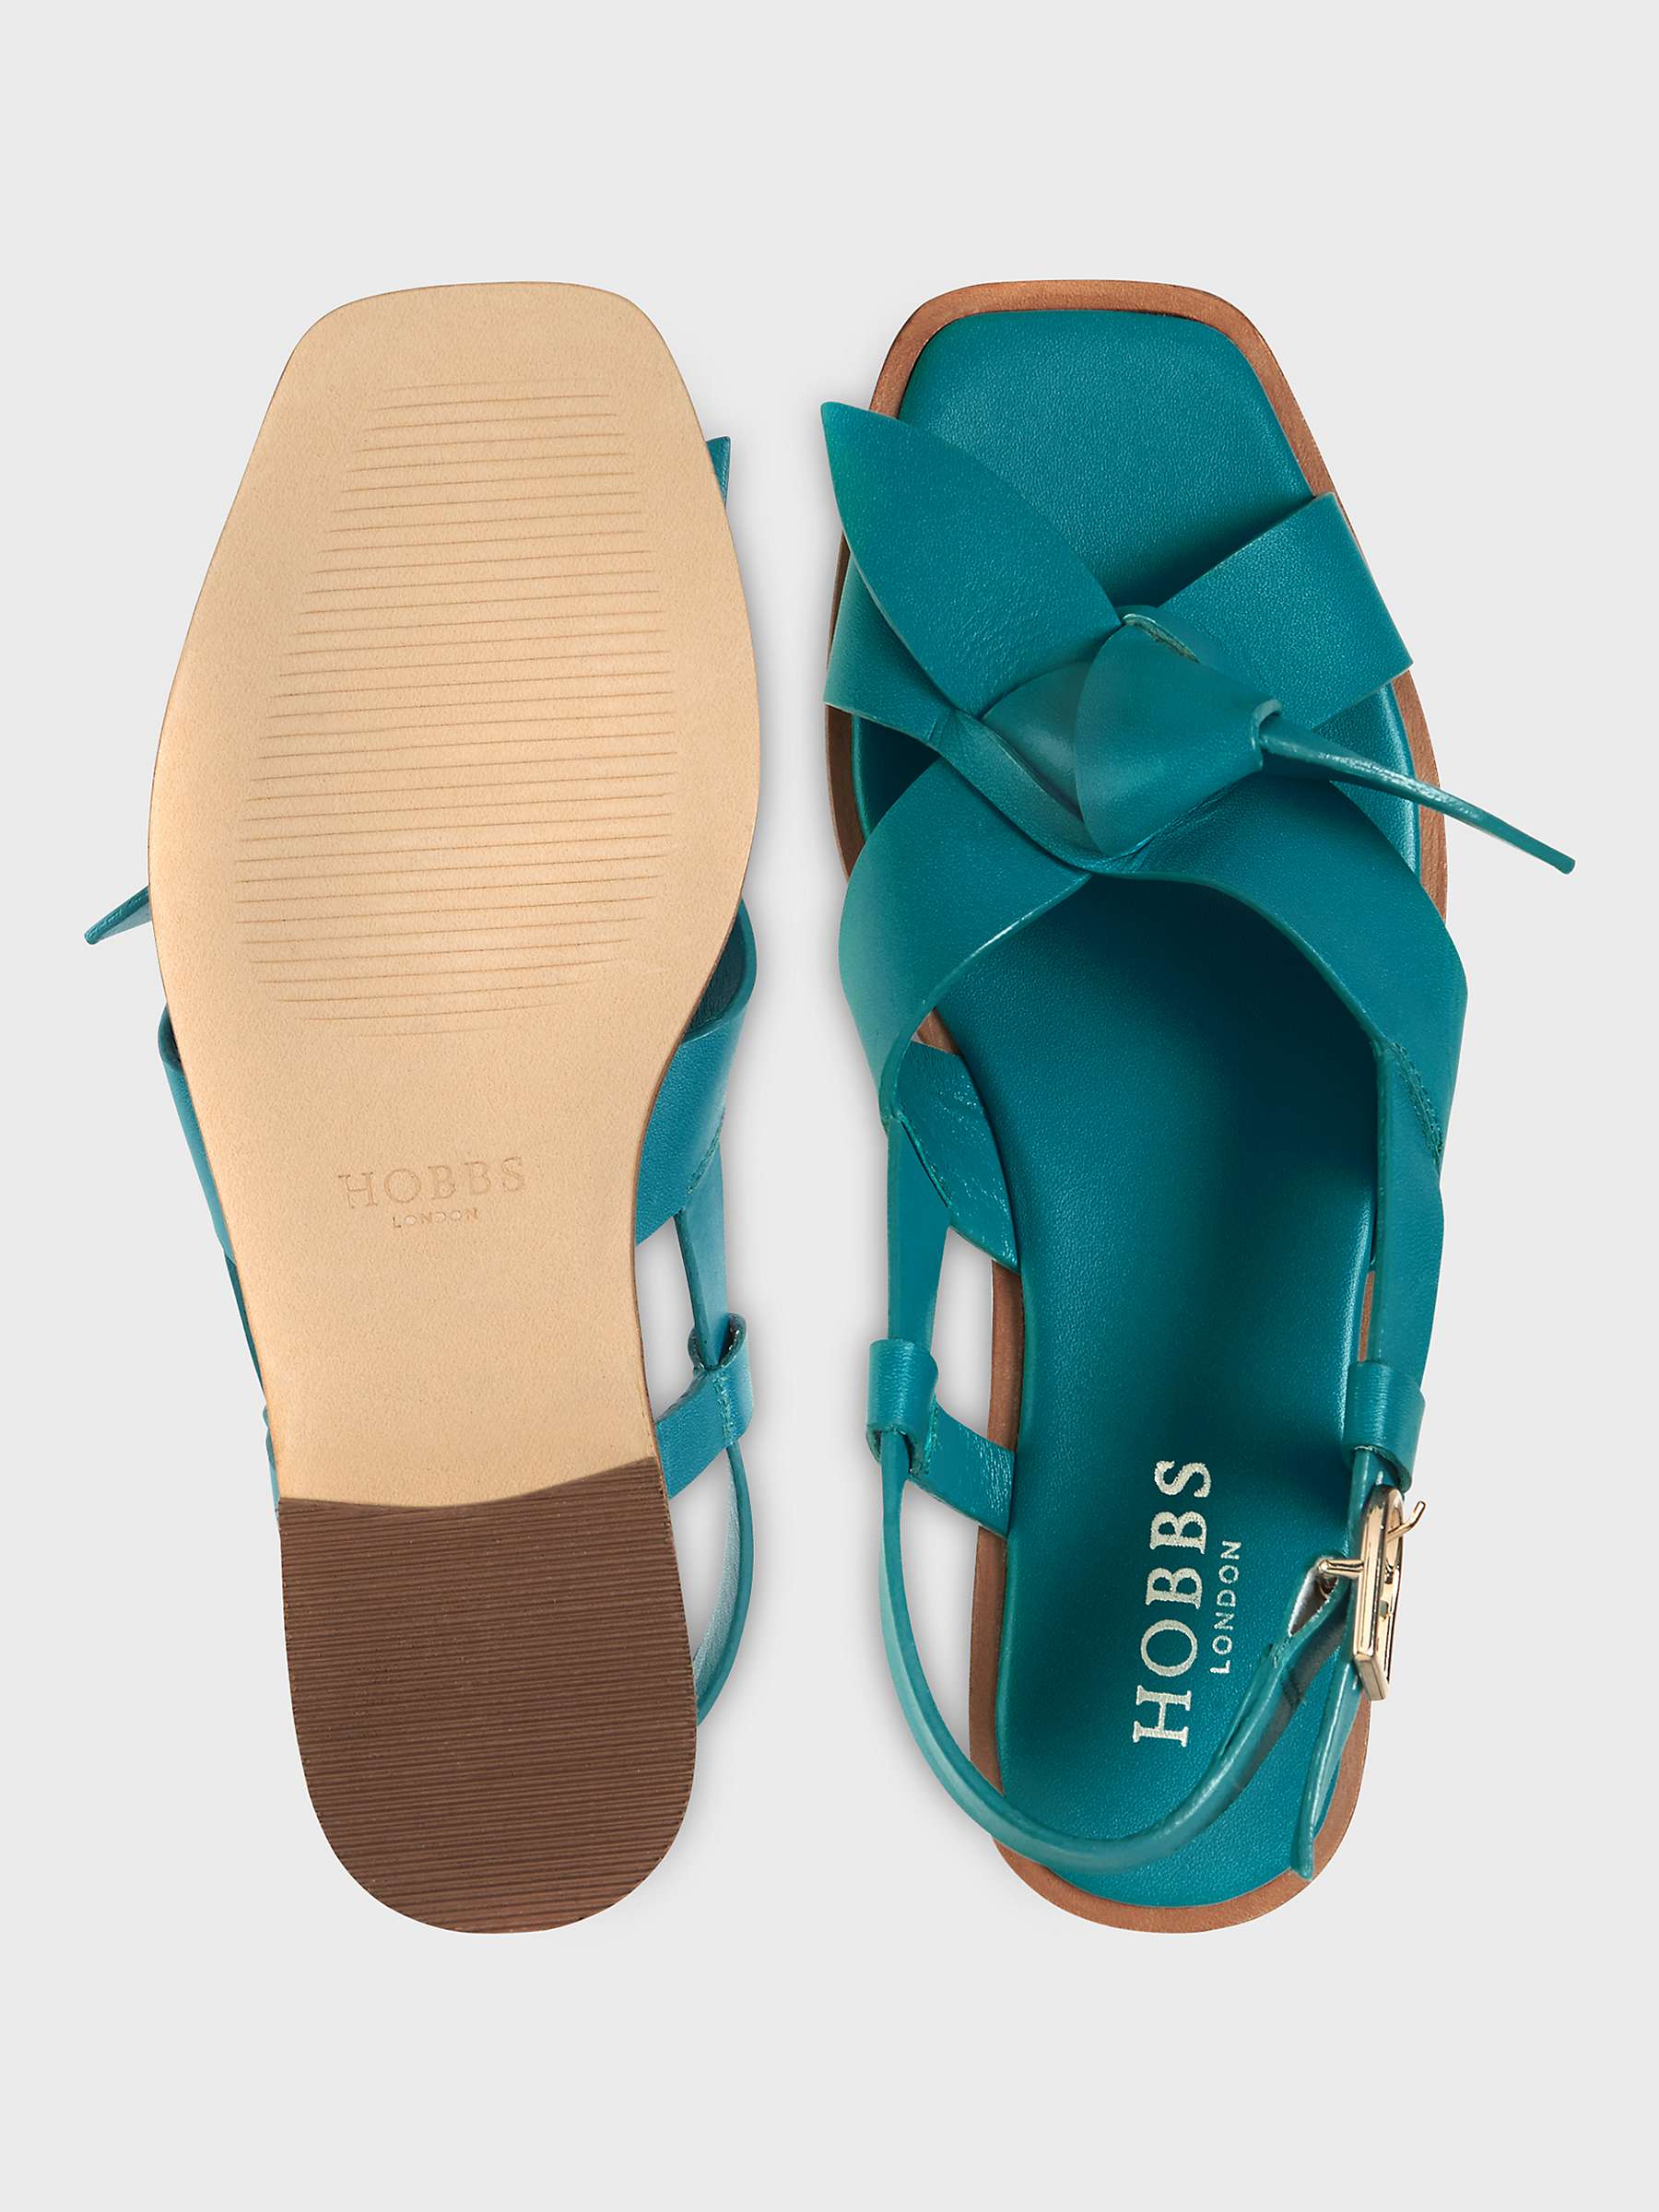 Buy Hobbs Aubrey Leather Footbed Sandals Online at johnlewis.com